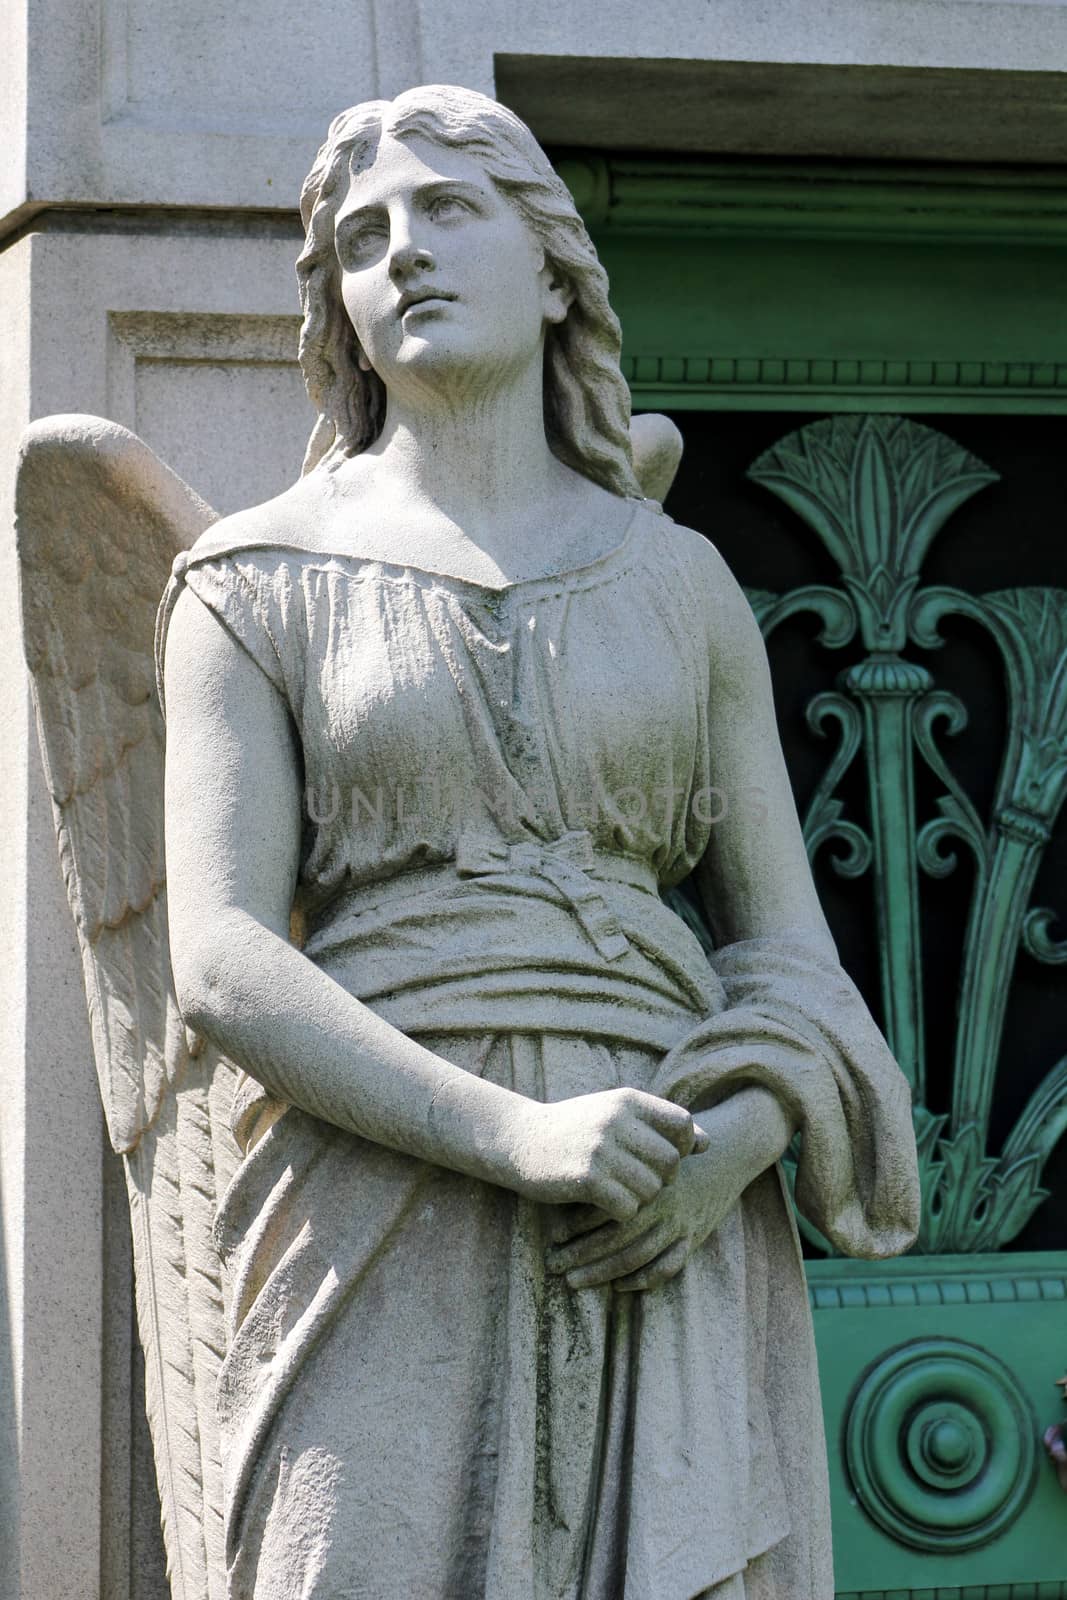 Stone Angel Guardian Statue by mpk1970